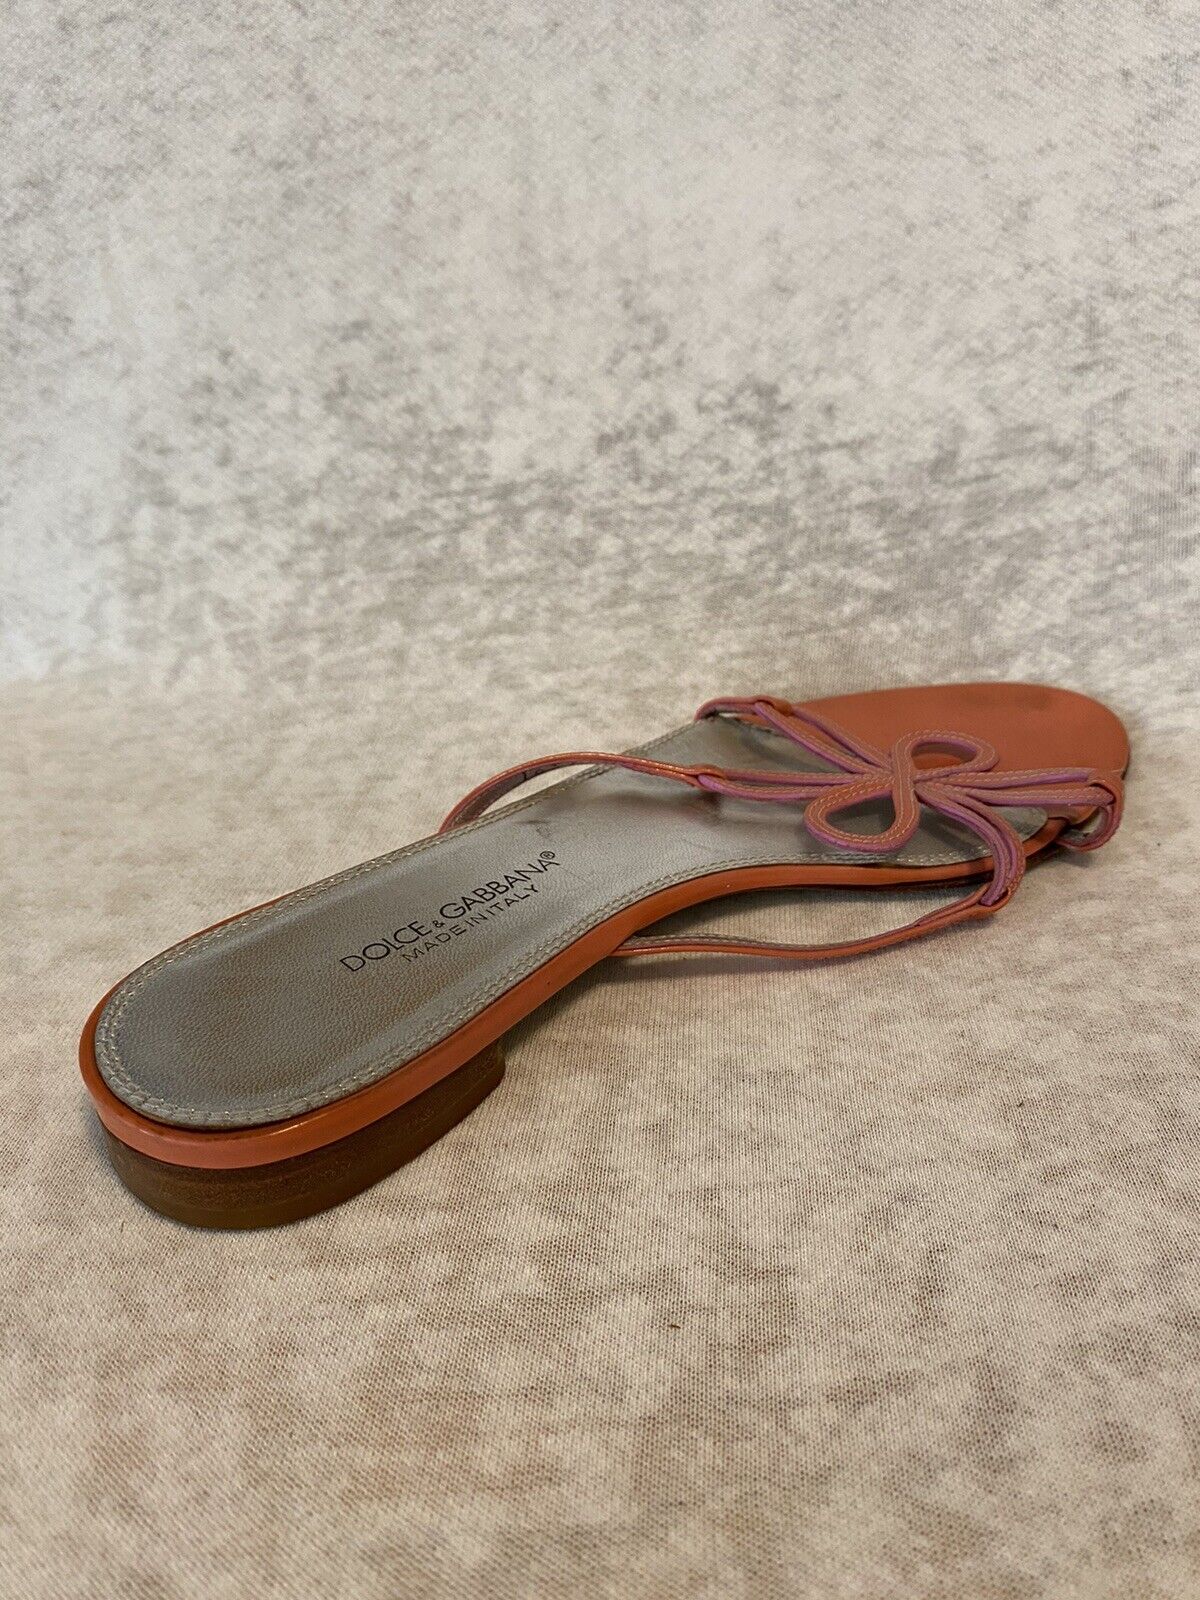 Dolce & Gabbana Flat Leather Sandals - image 3